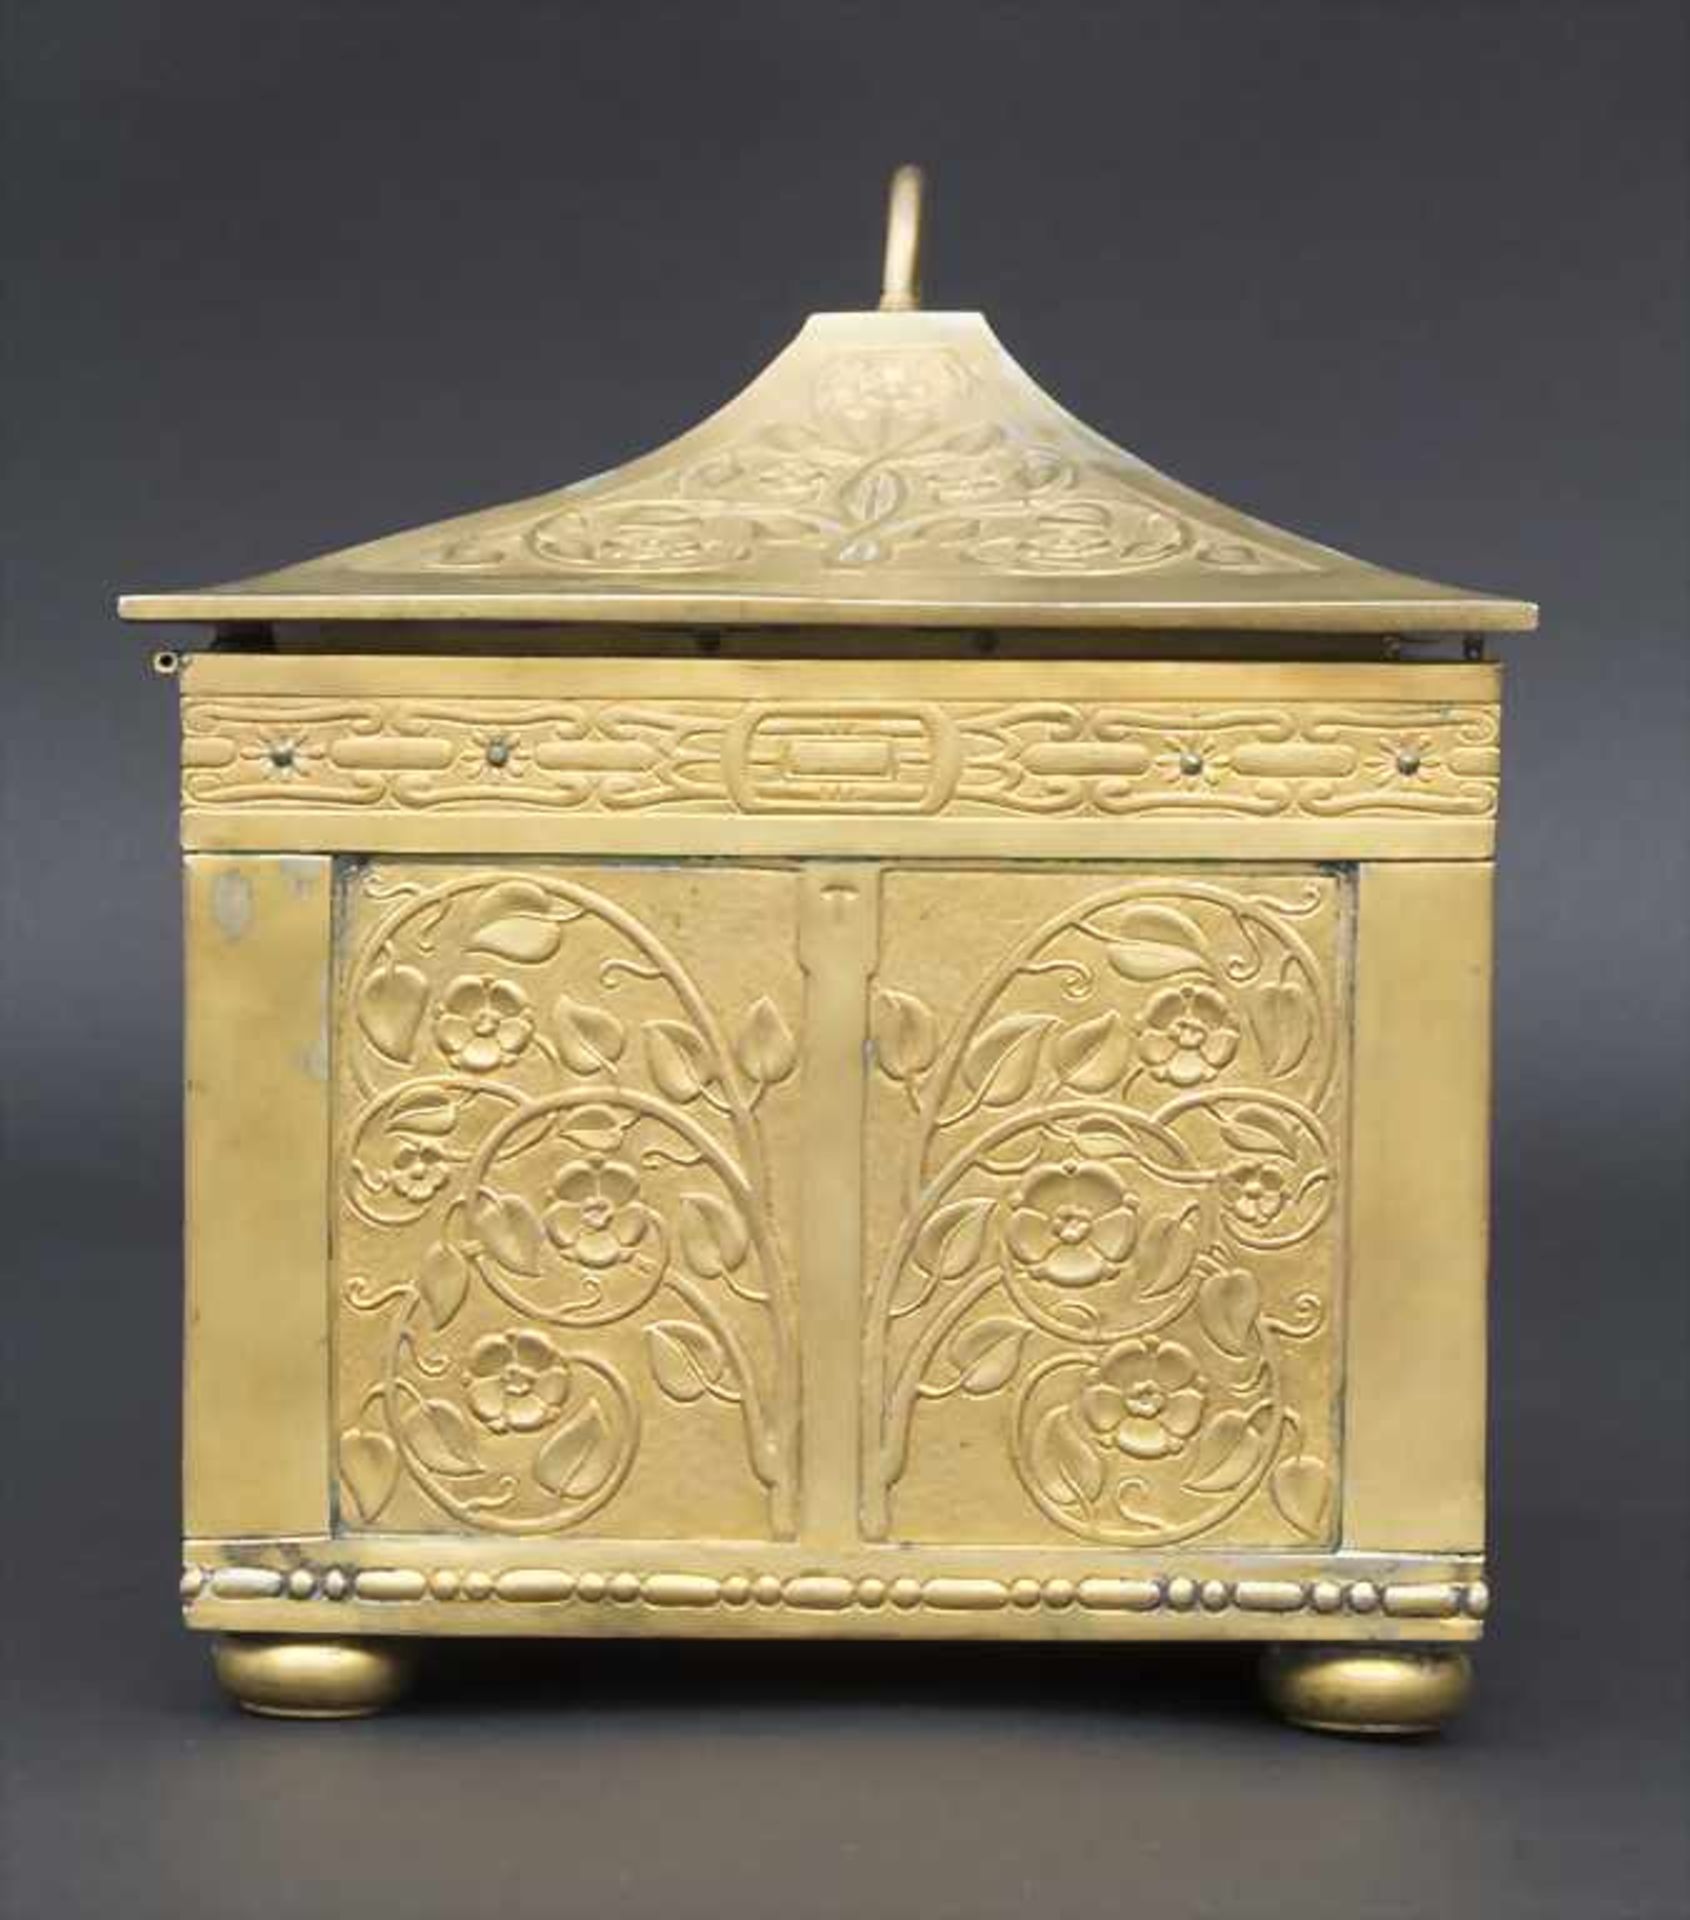 Jugendstil Schmuckschatulle / An Art Nouveau jewellery box, Entwurf wohl Künstlerkolonie - Bild 3 aus 7